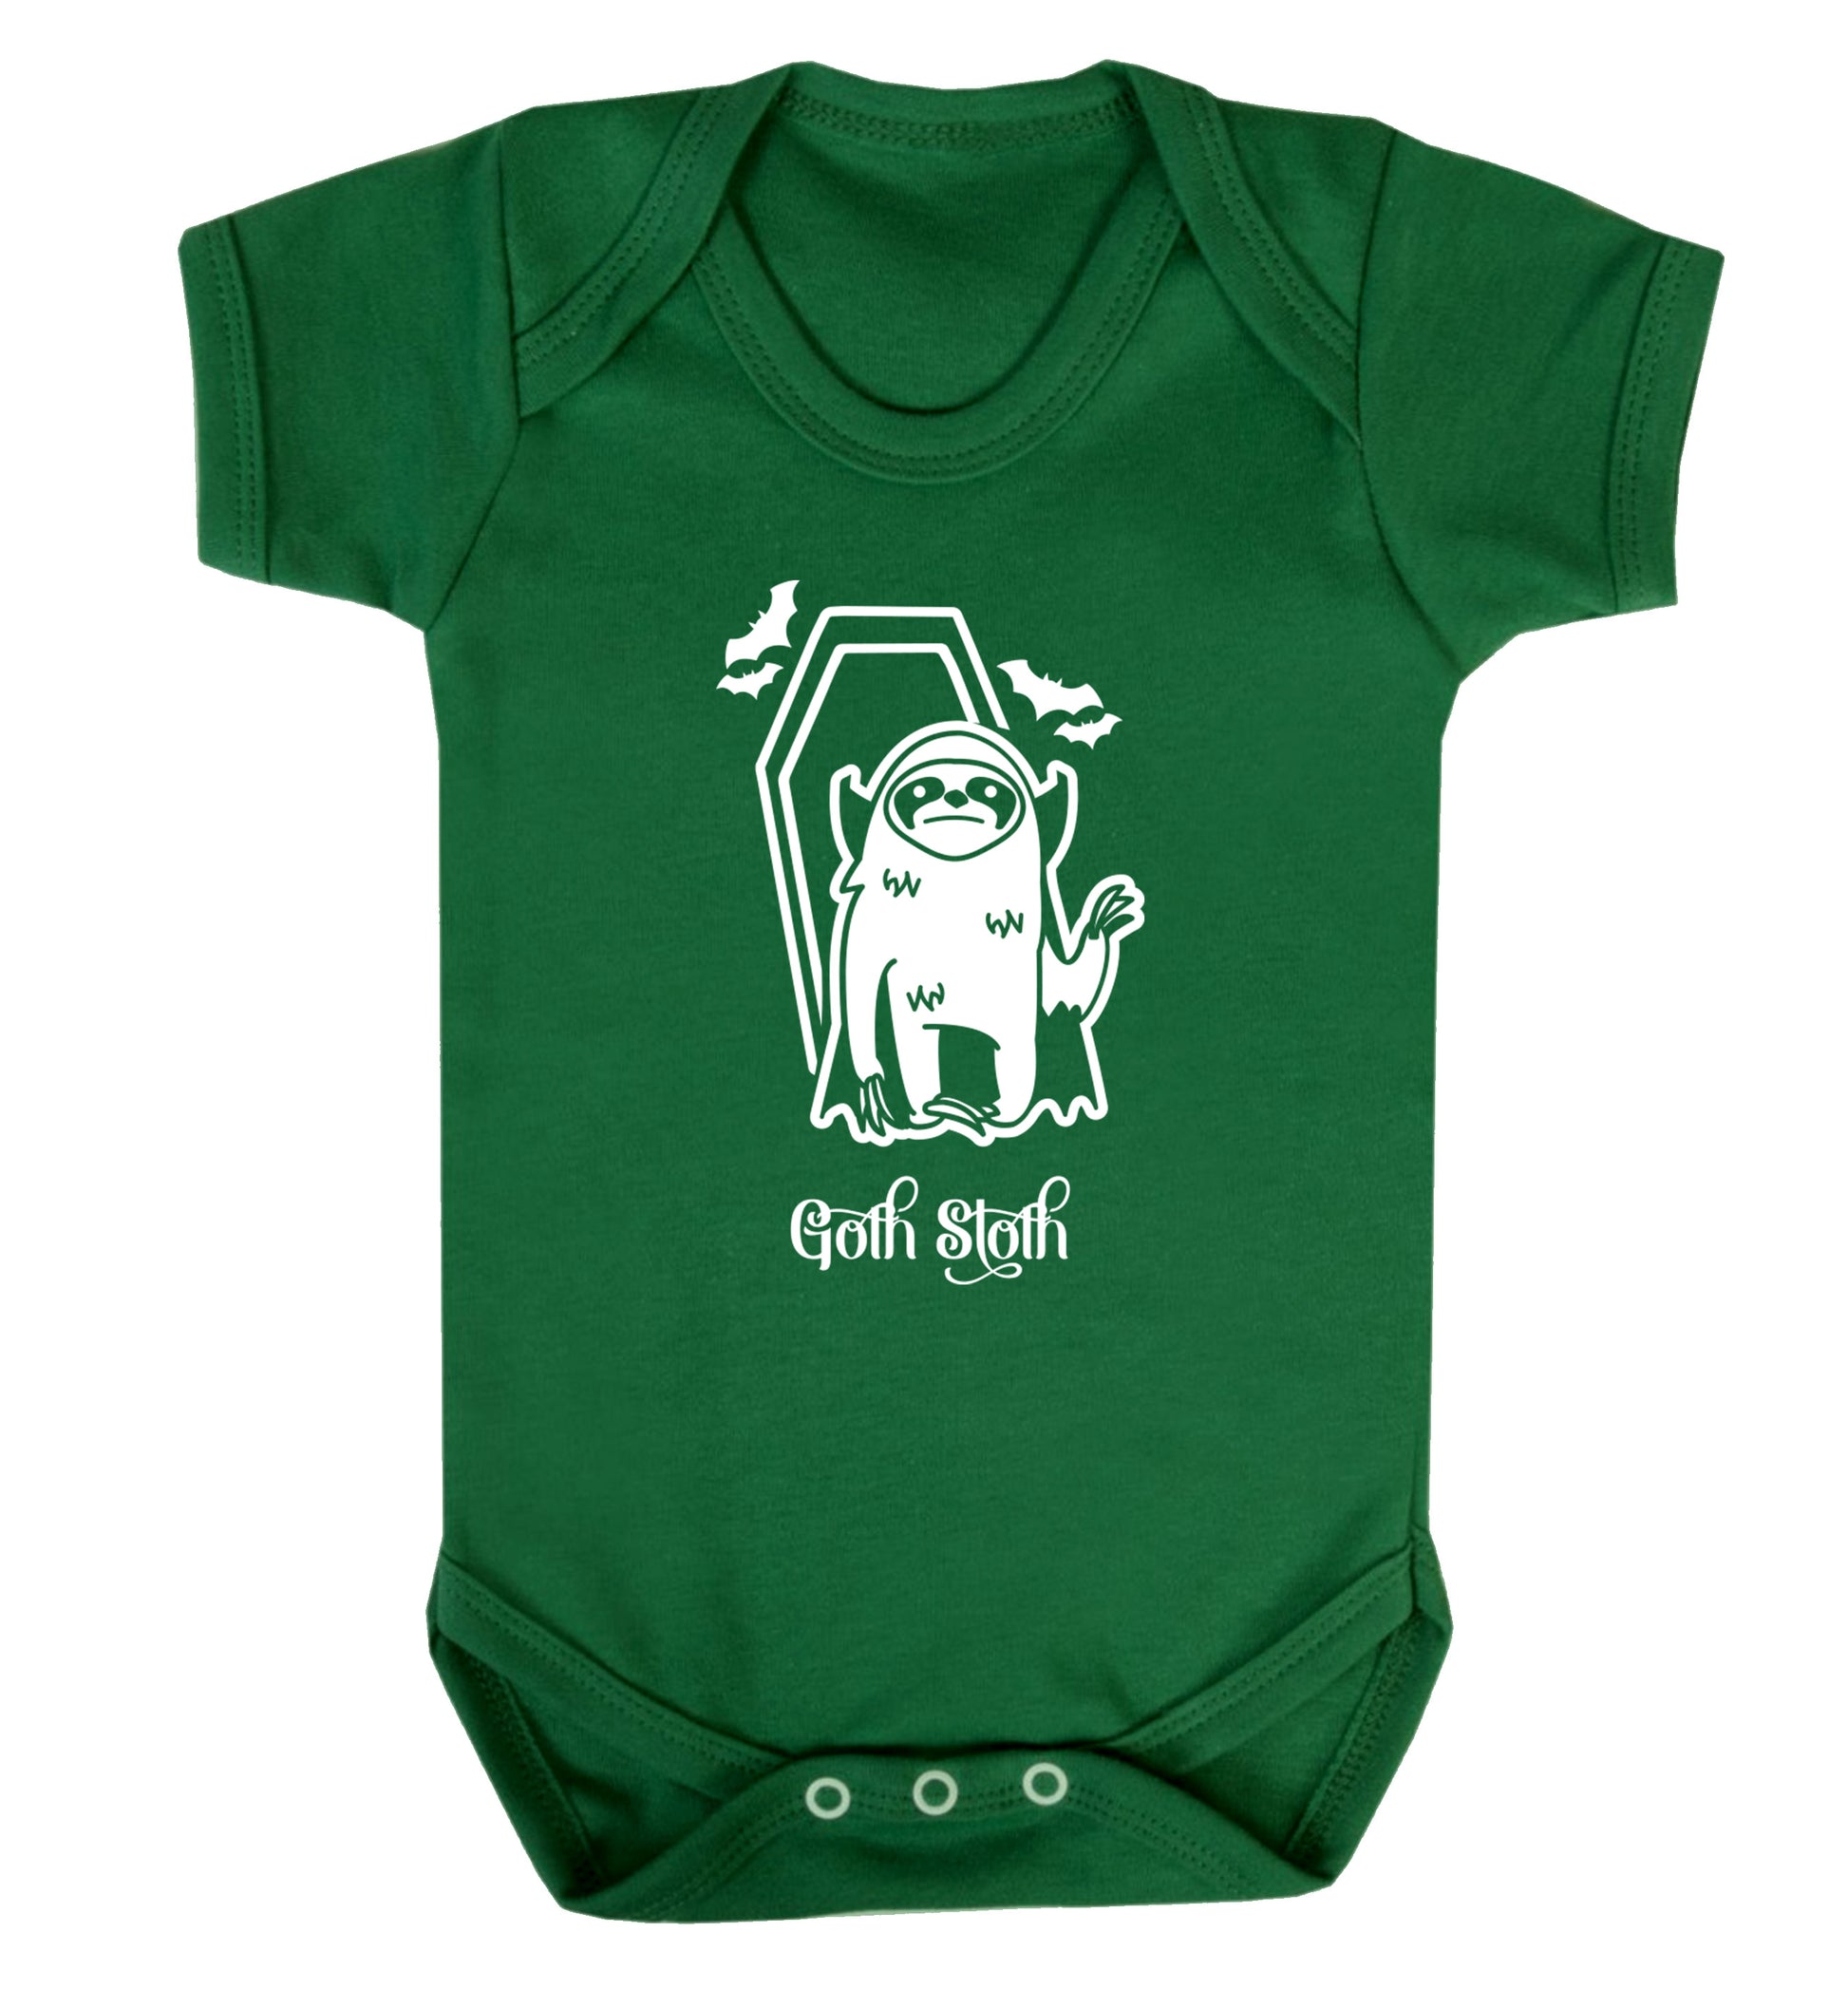 Goth Sloth Baby Vest green 18-24 months